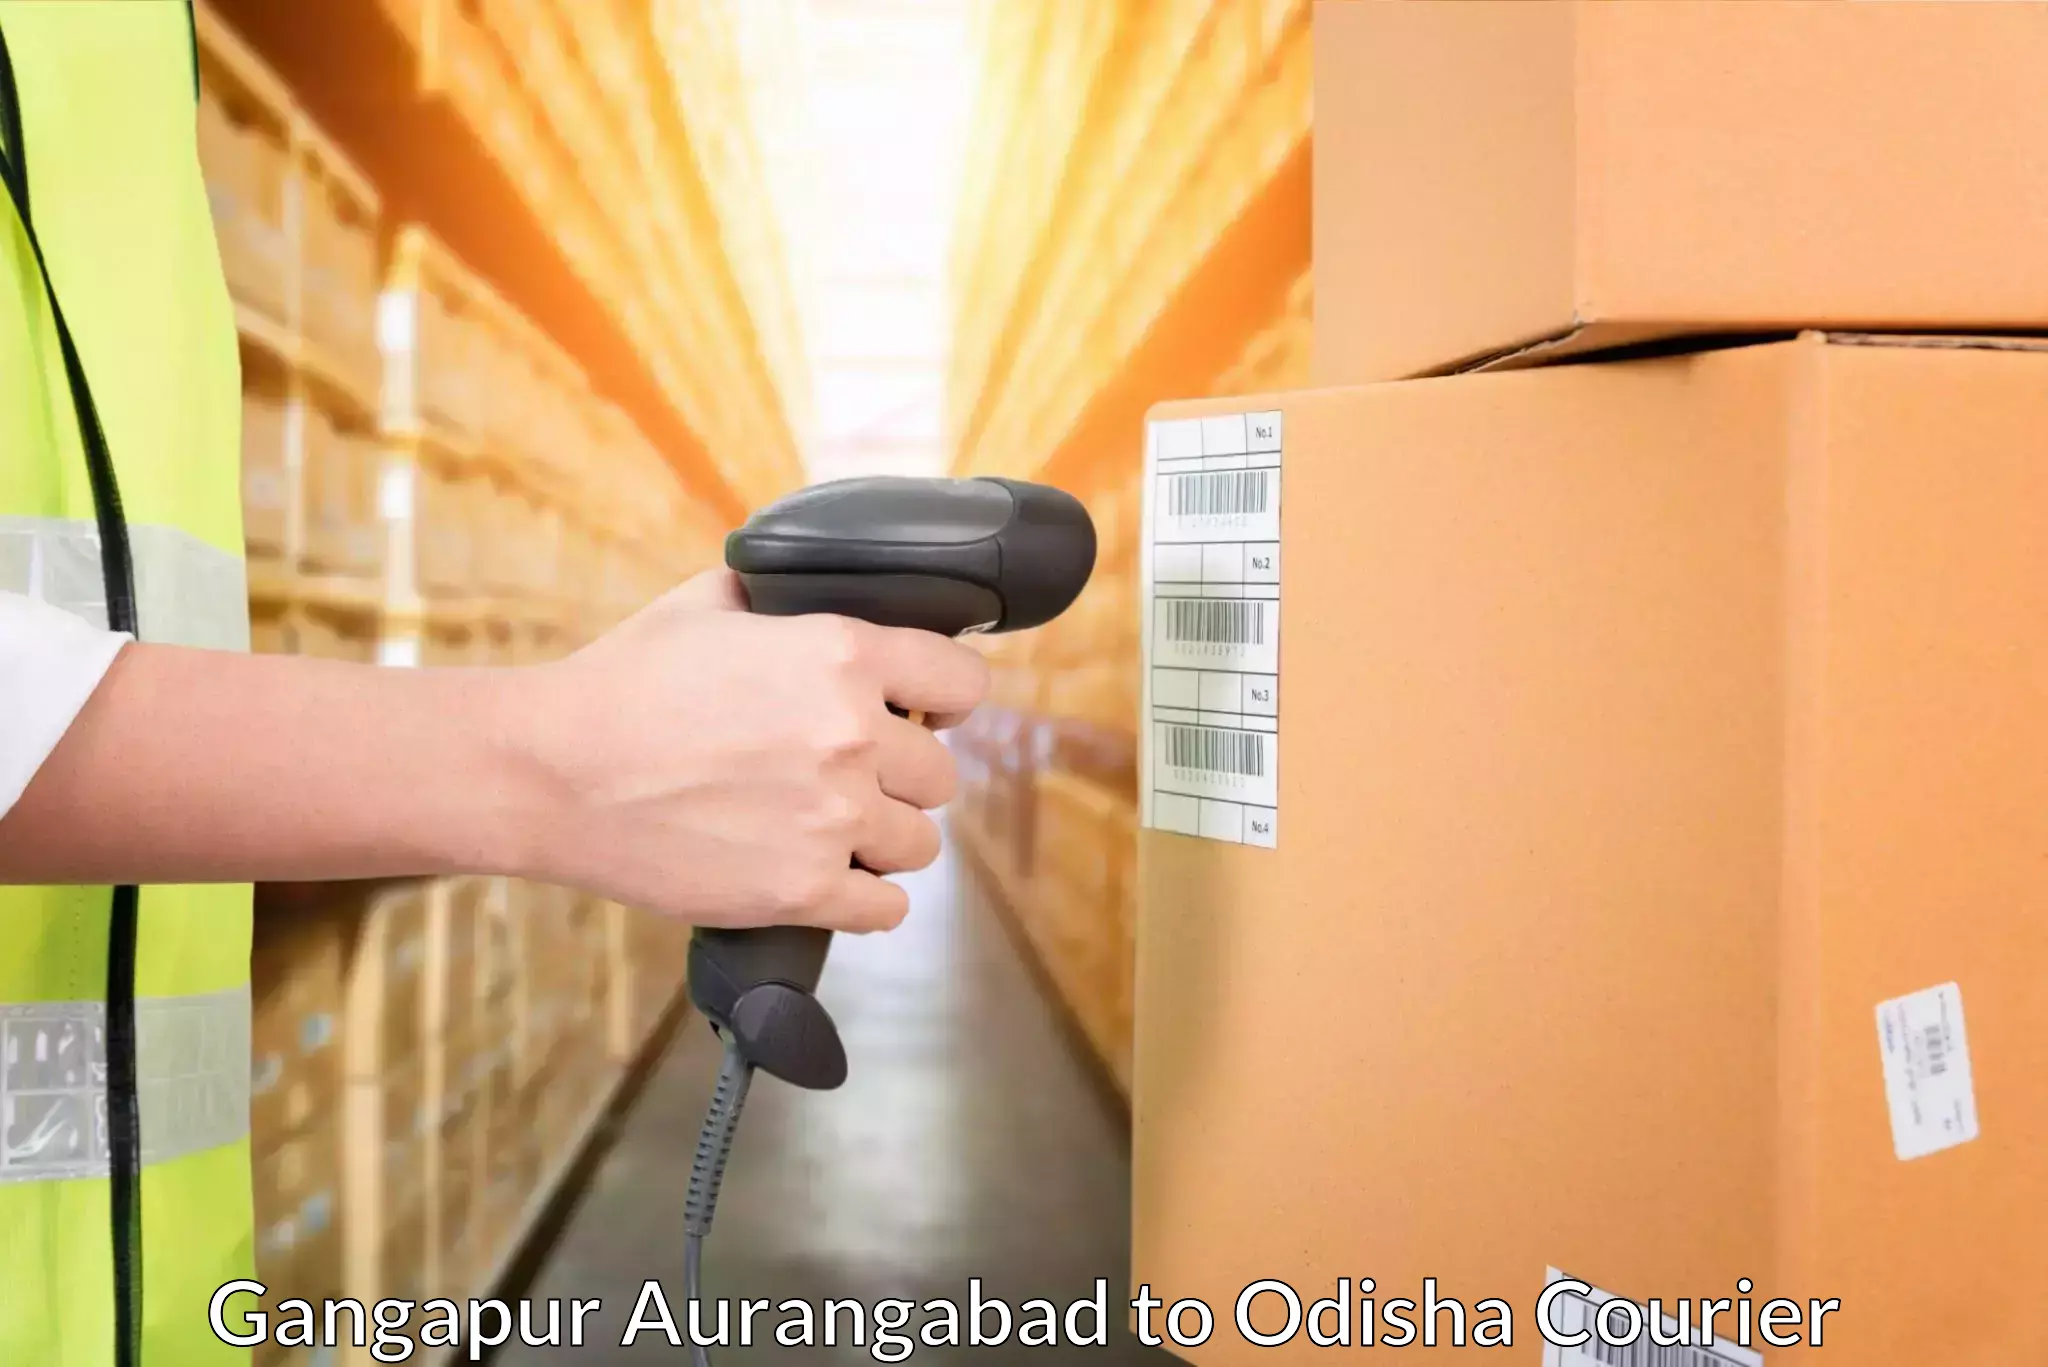 Enhanced tracking features in Gangapur Aurangabad to Odisha